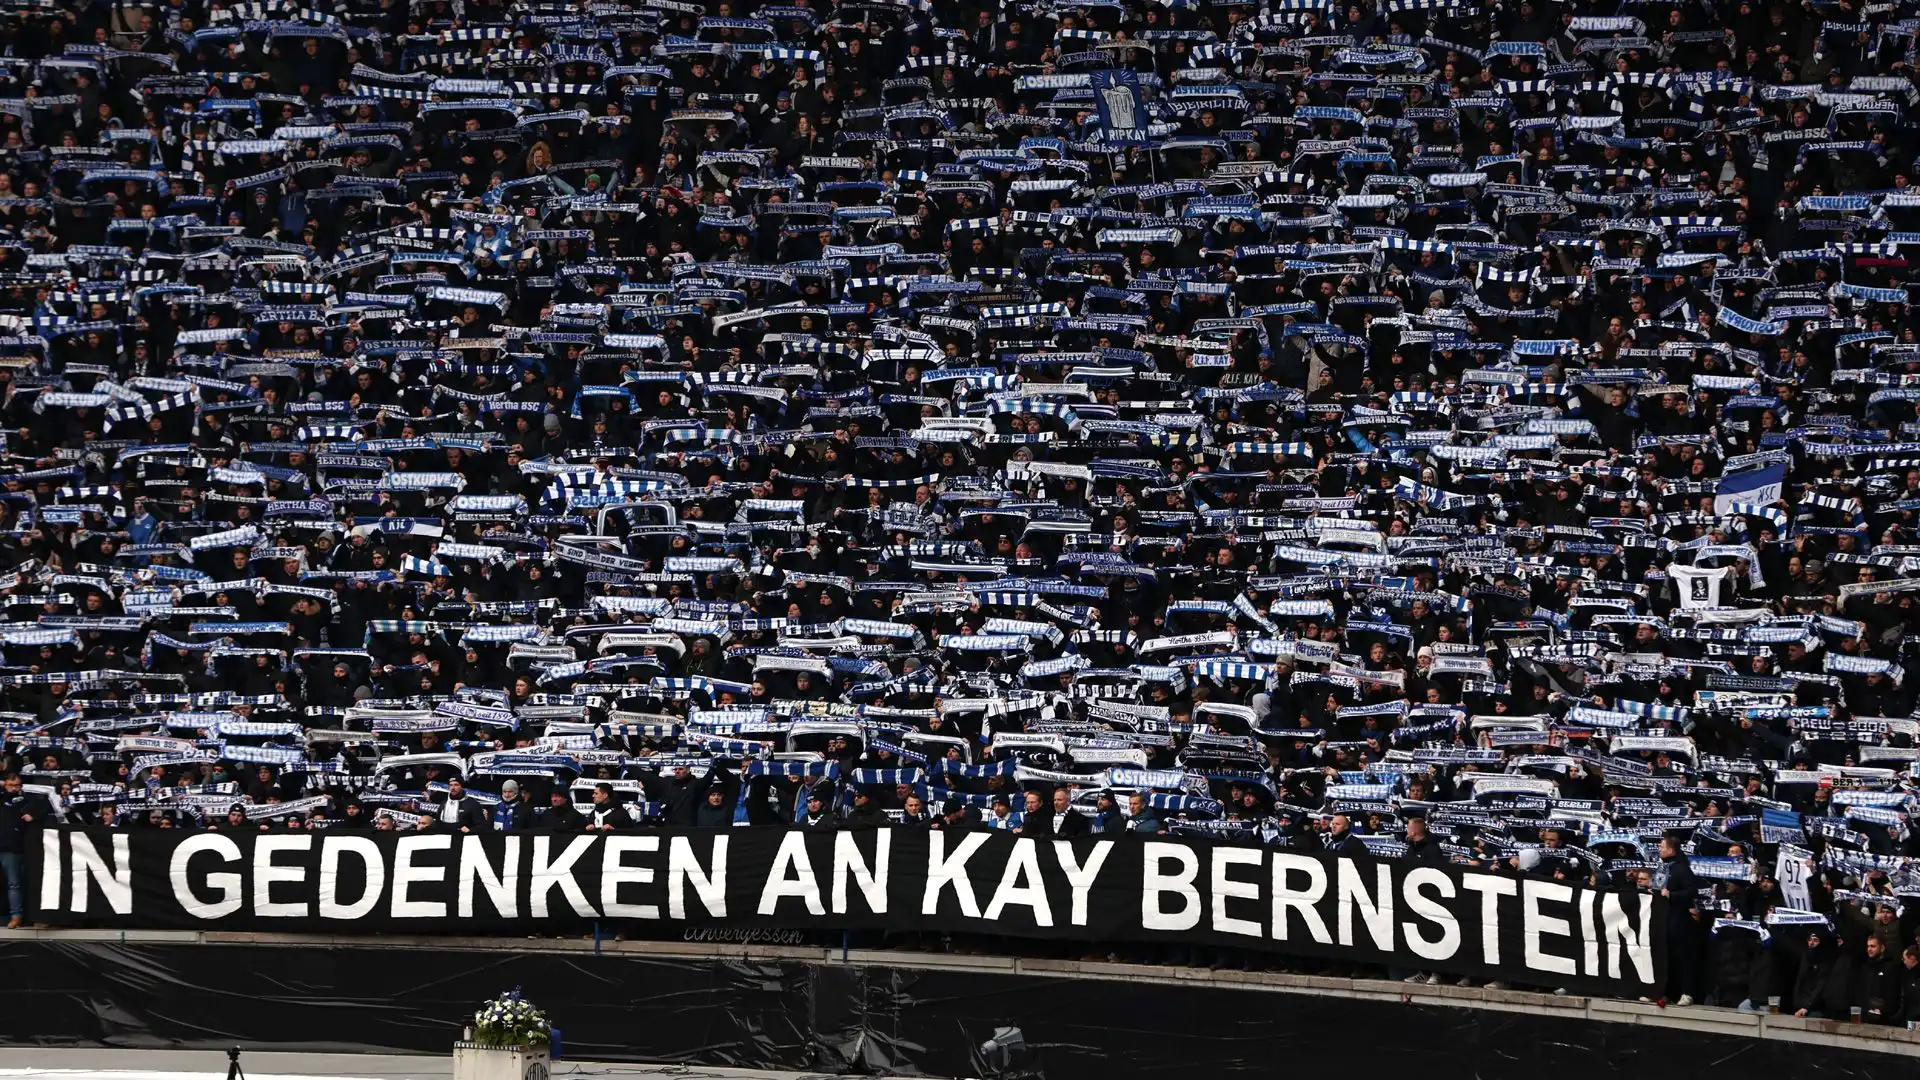 Ora l'Hertha cercherà di raggiungere la promozione per dedicarla a Bernstein